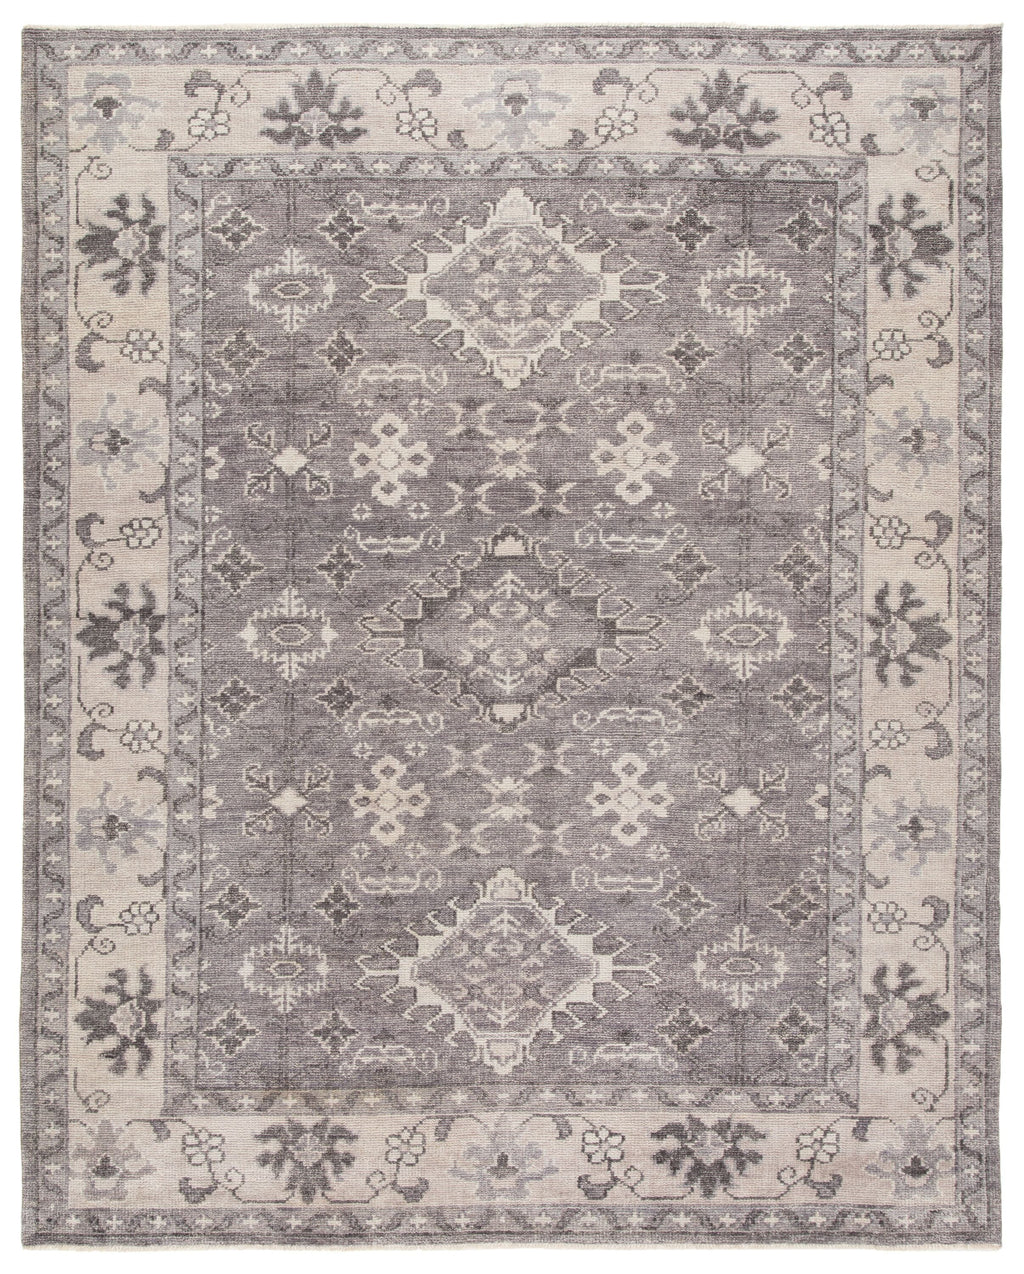 sln12 kella hand knotted medallion gray area rug design by jaipur 1